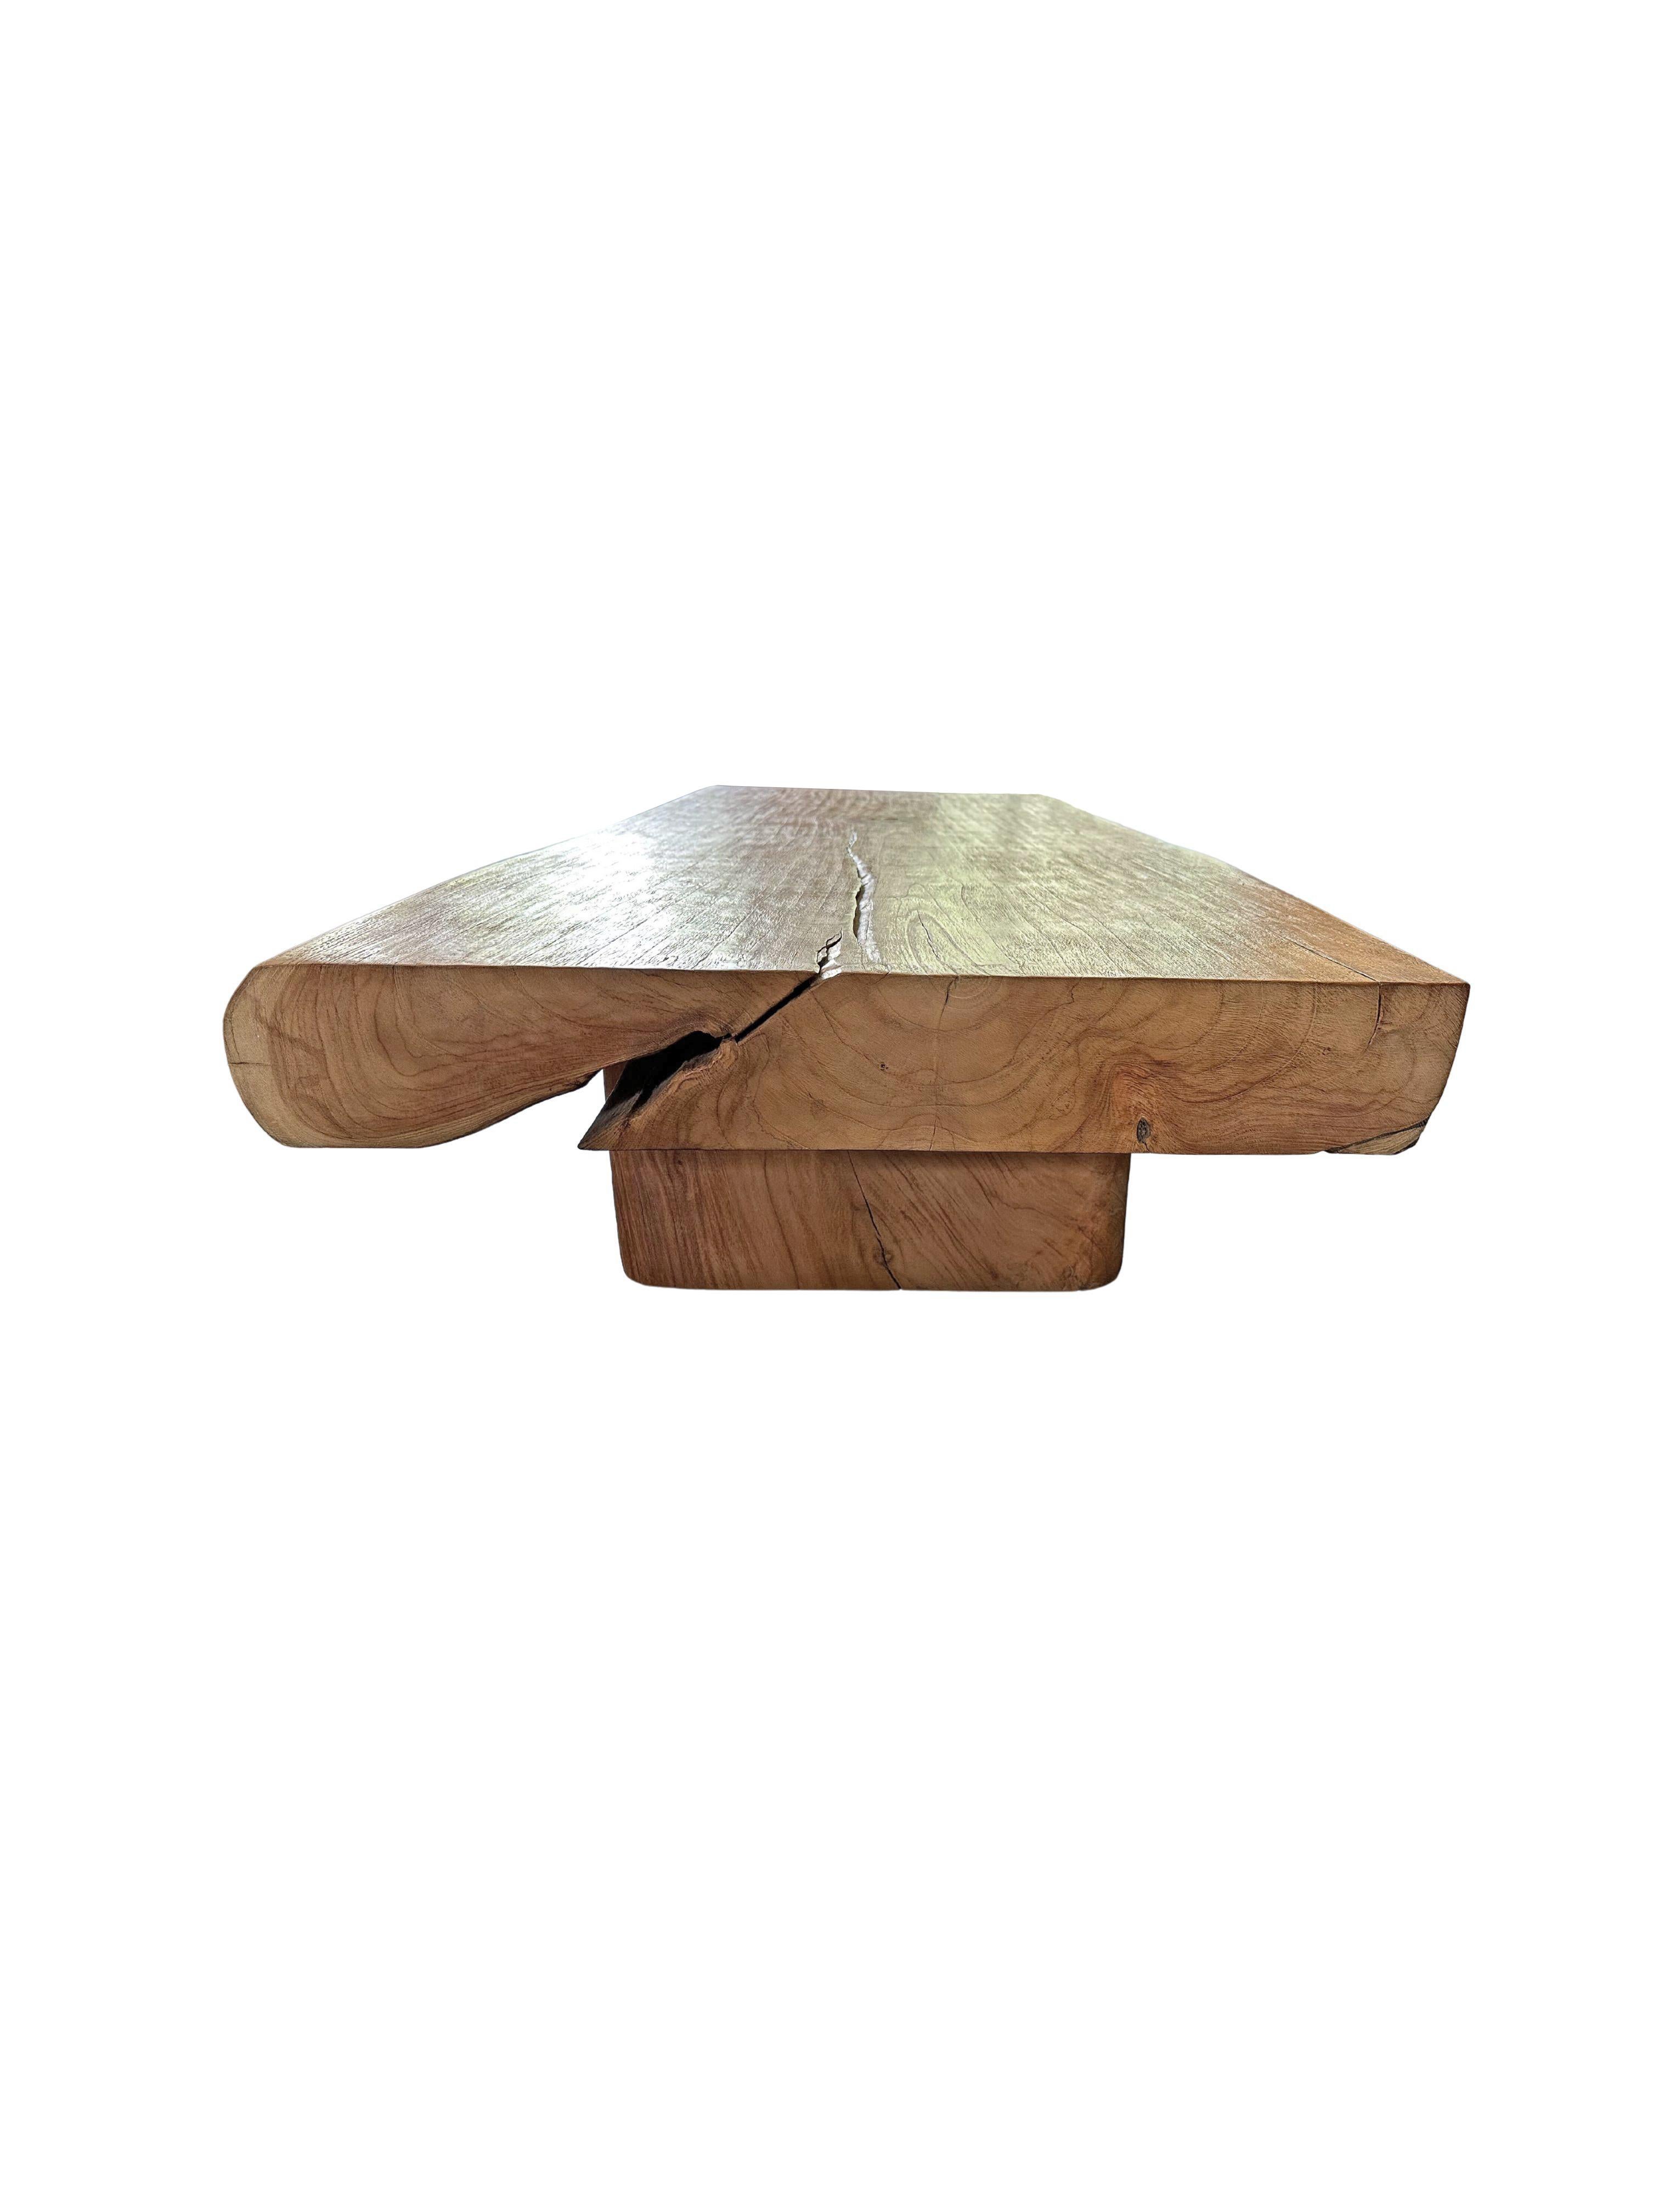 Solid Teak Wood Table Modern Organic For Sale 2